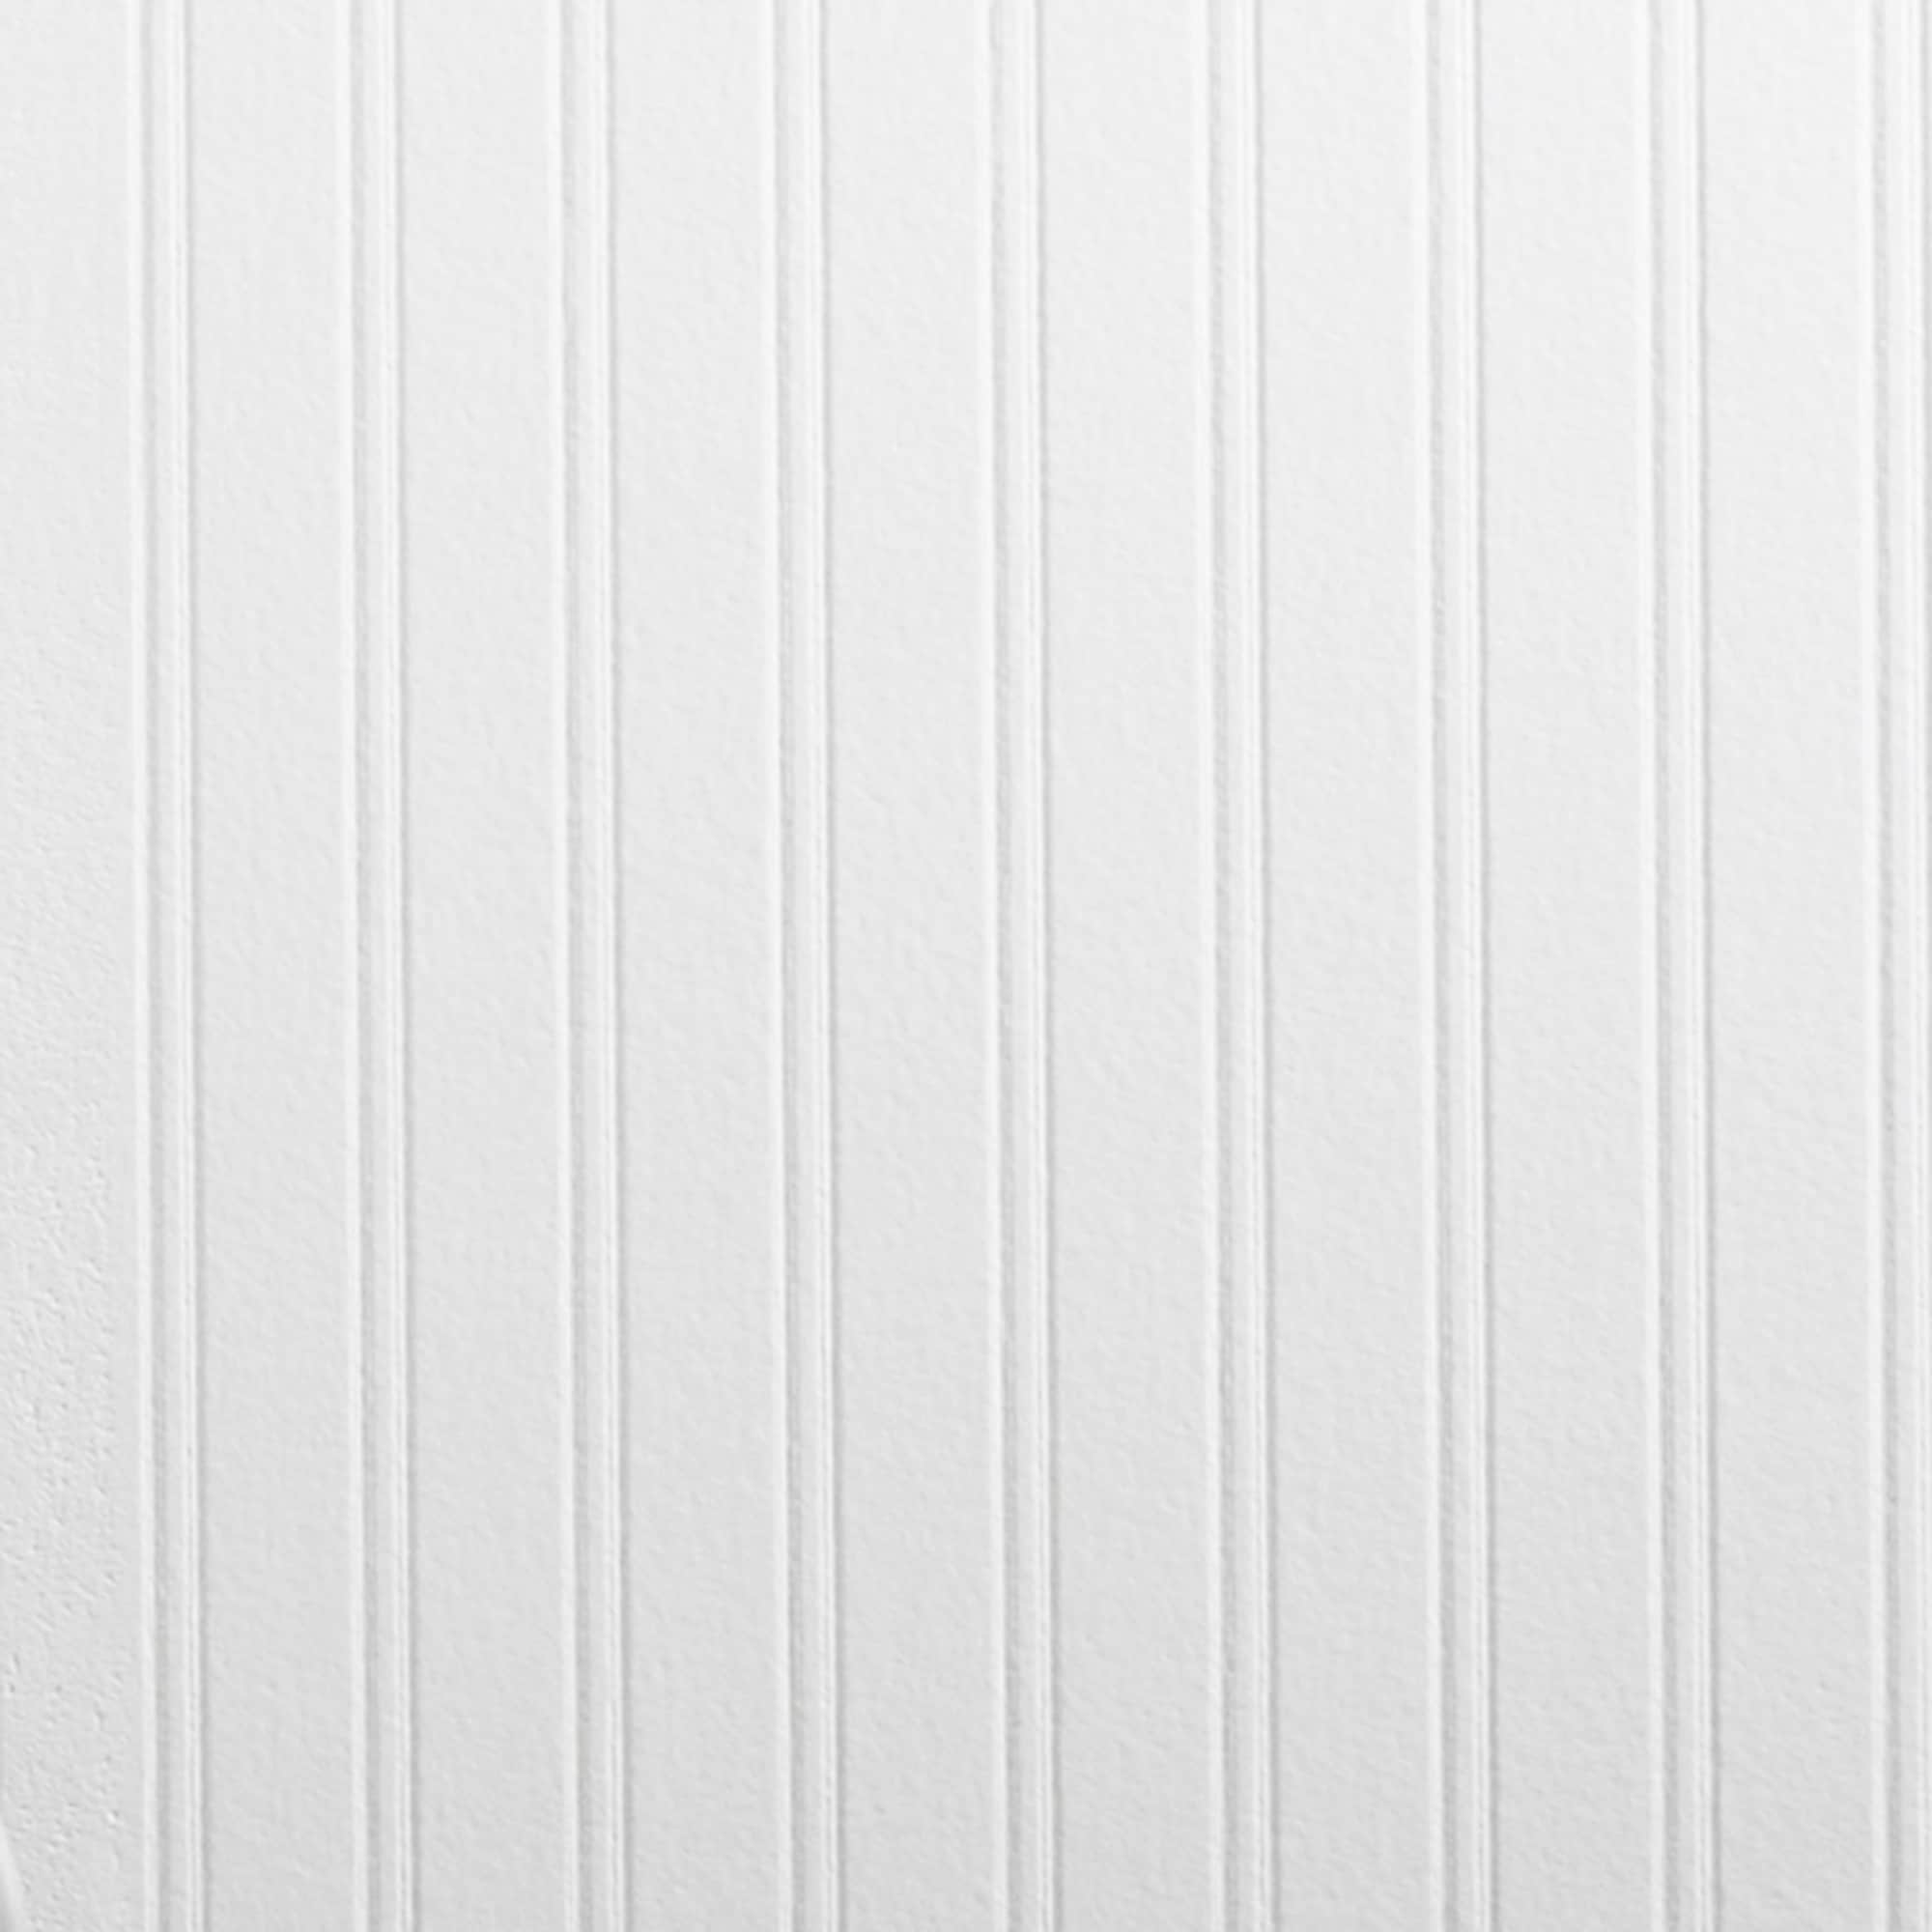 Mirage Jute Effect Texture Wallpaper Absolute White 57 sqftper roll   Amazonin Home Improvement